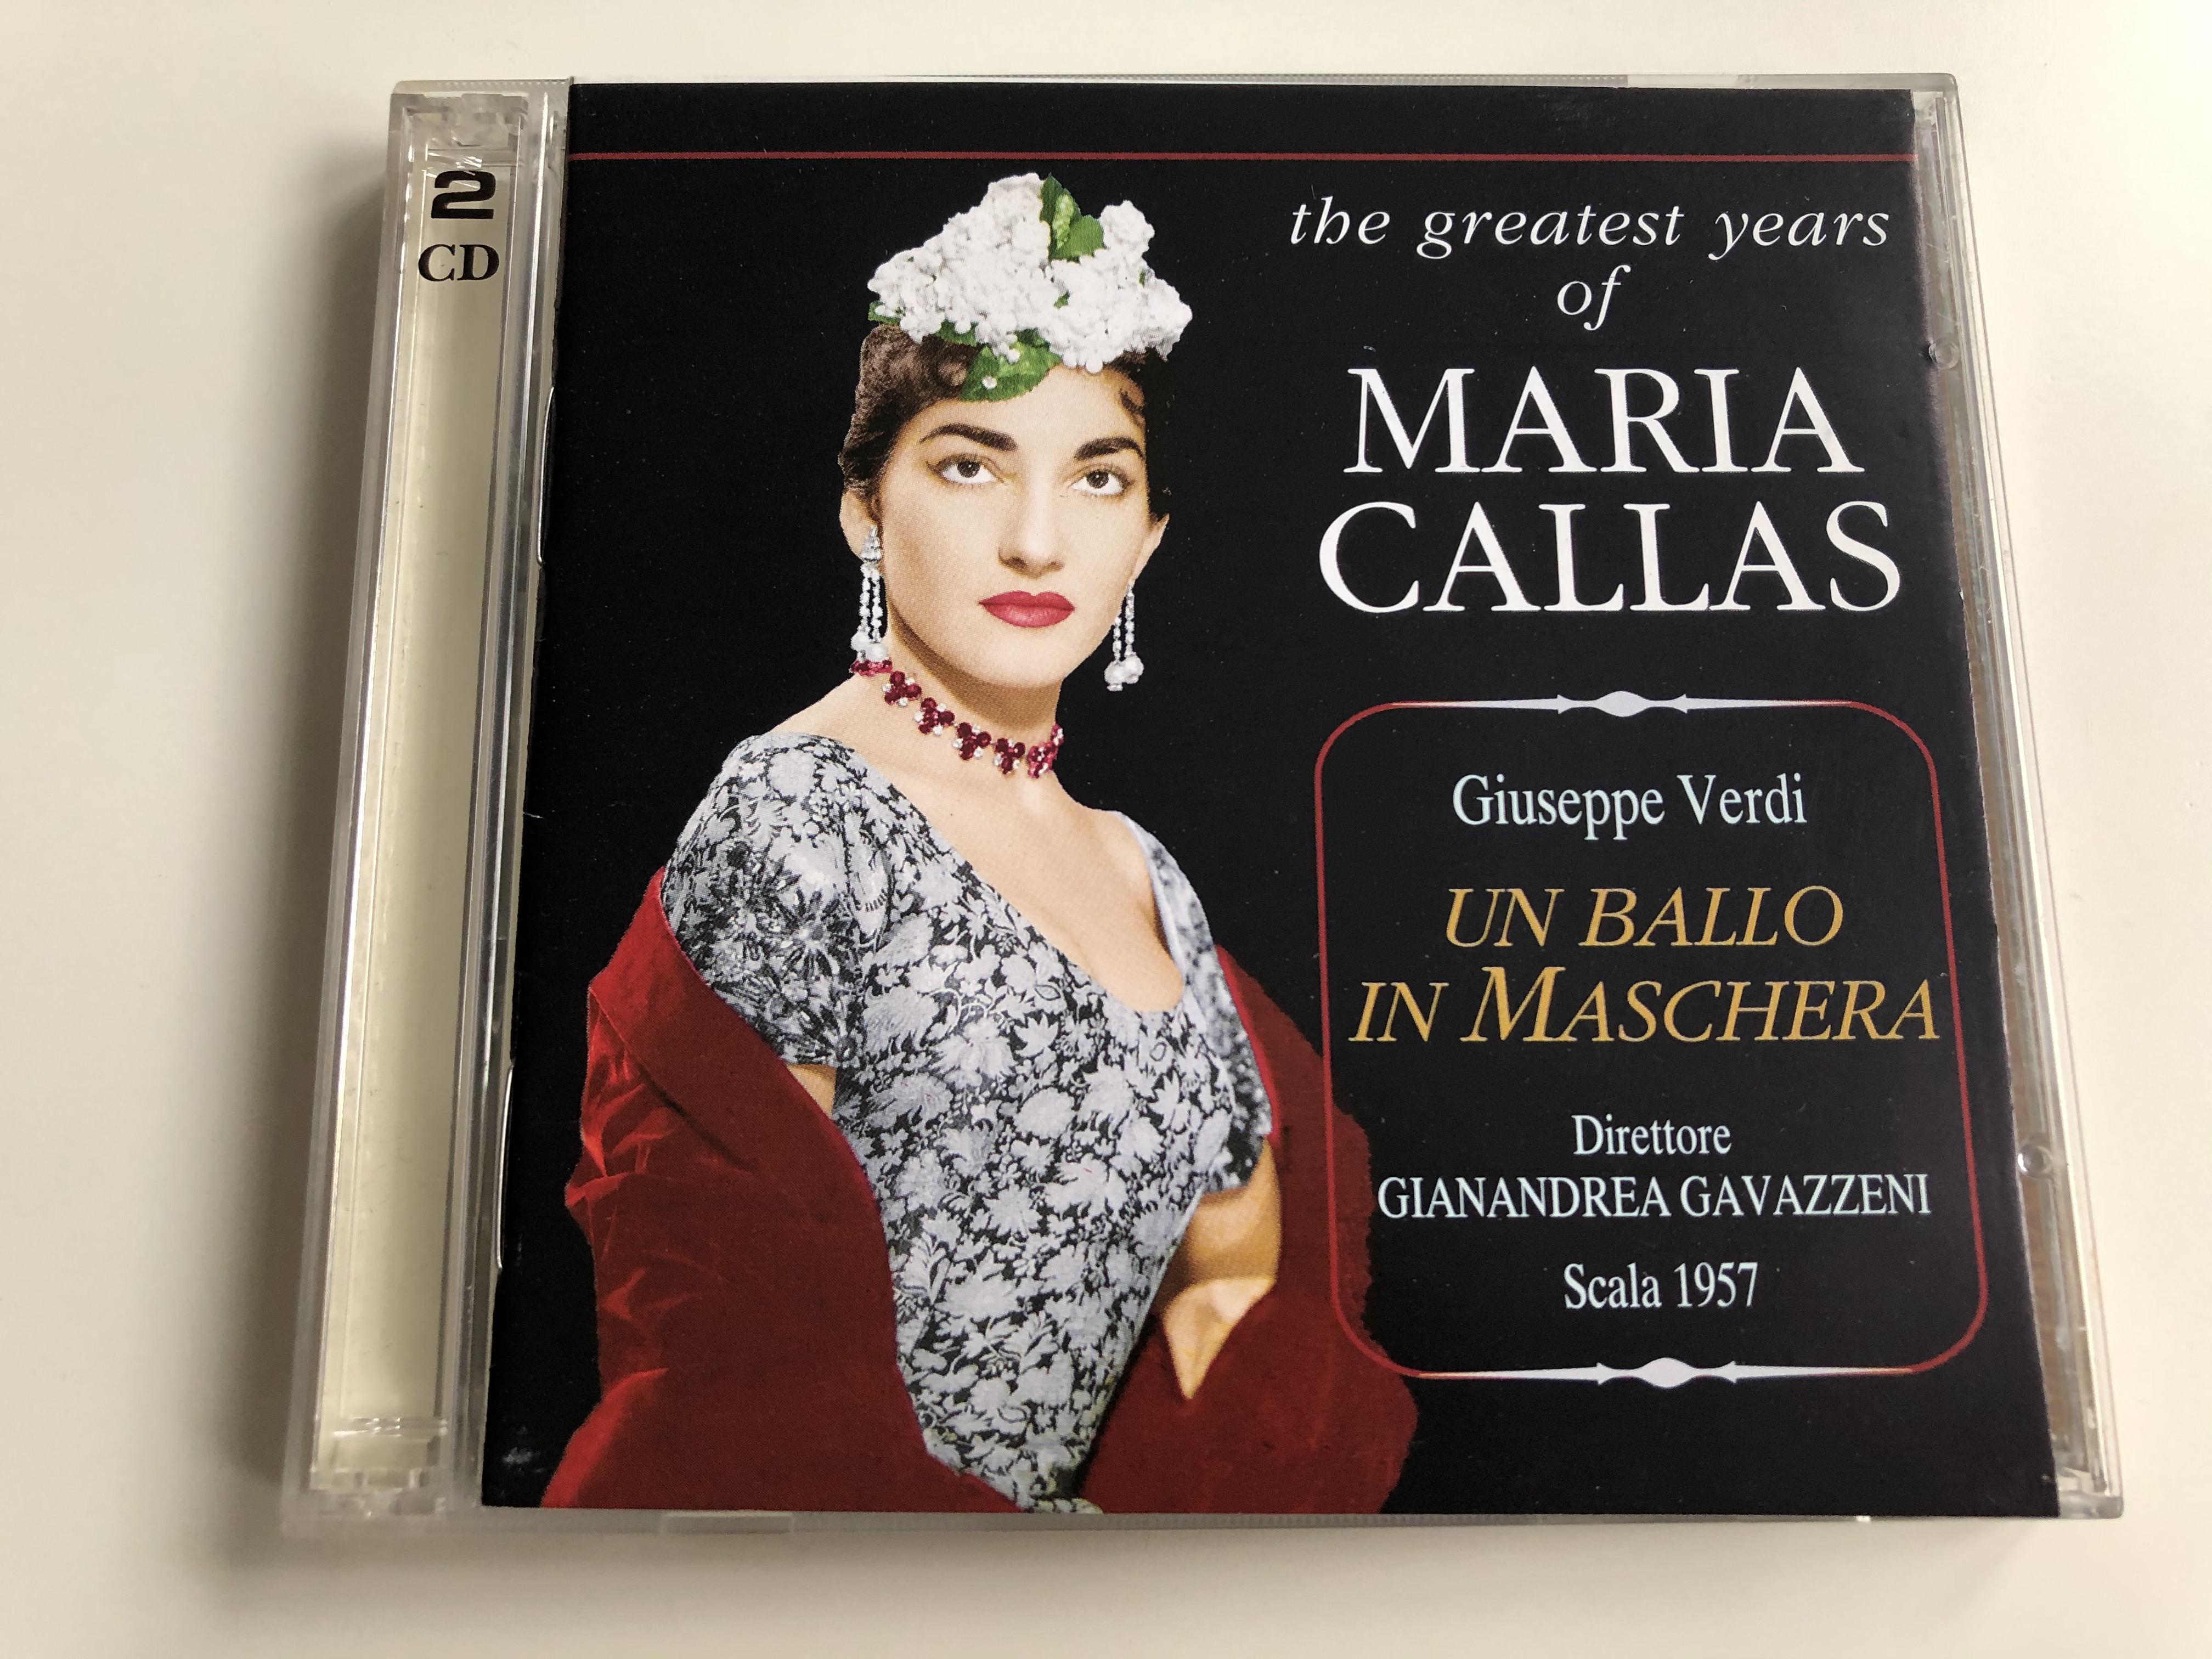 the-greatest-years-of-maria-callas-giuseppe-verdi-un-ballo-in-maschera-direttore-gianandrea-gavazzeni-scala-1957-sakkaris-records-audio-cd-pr.sr.-273274-1-.jpg